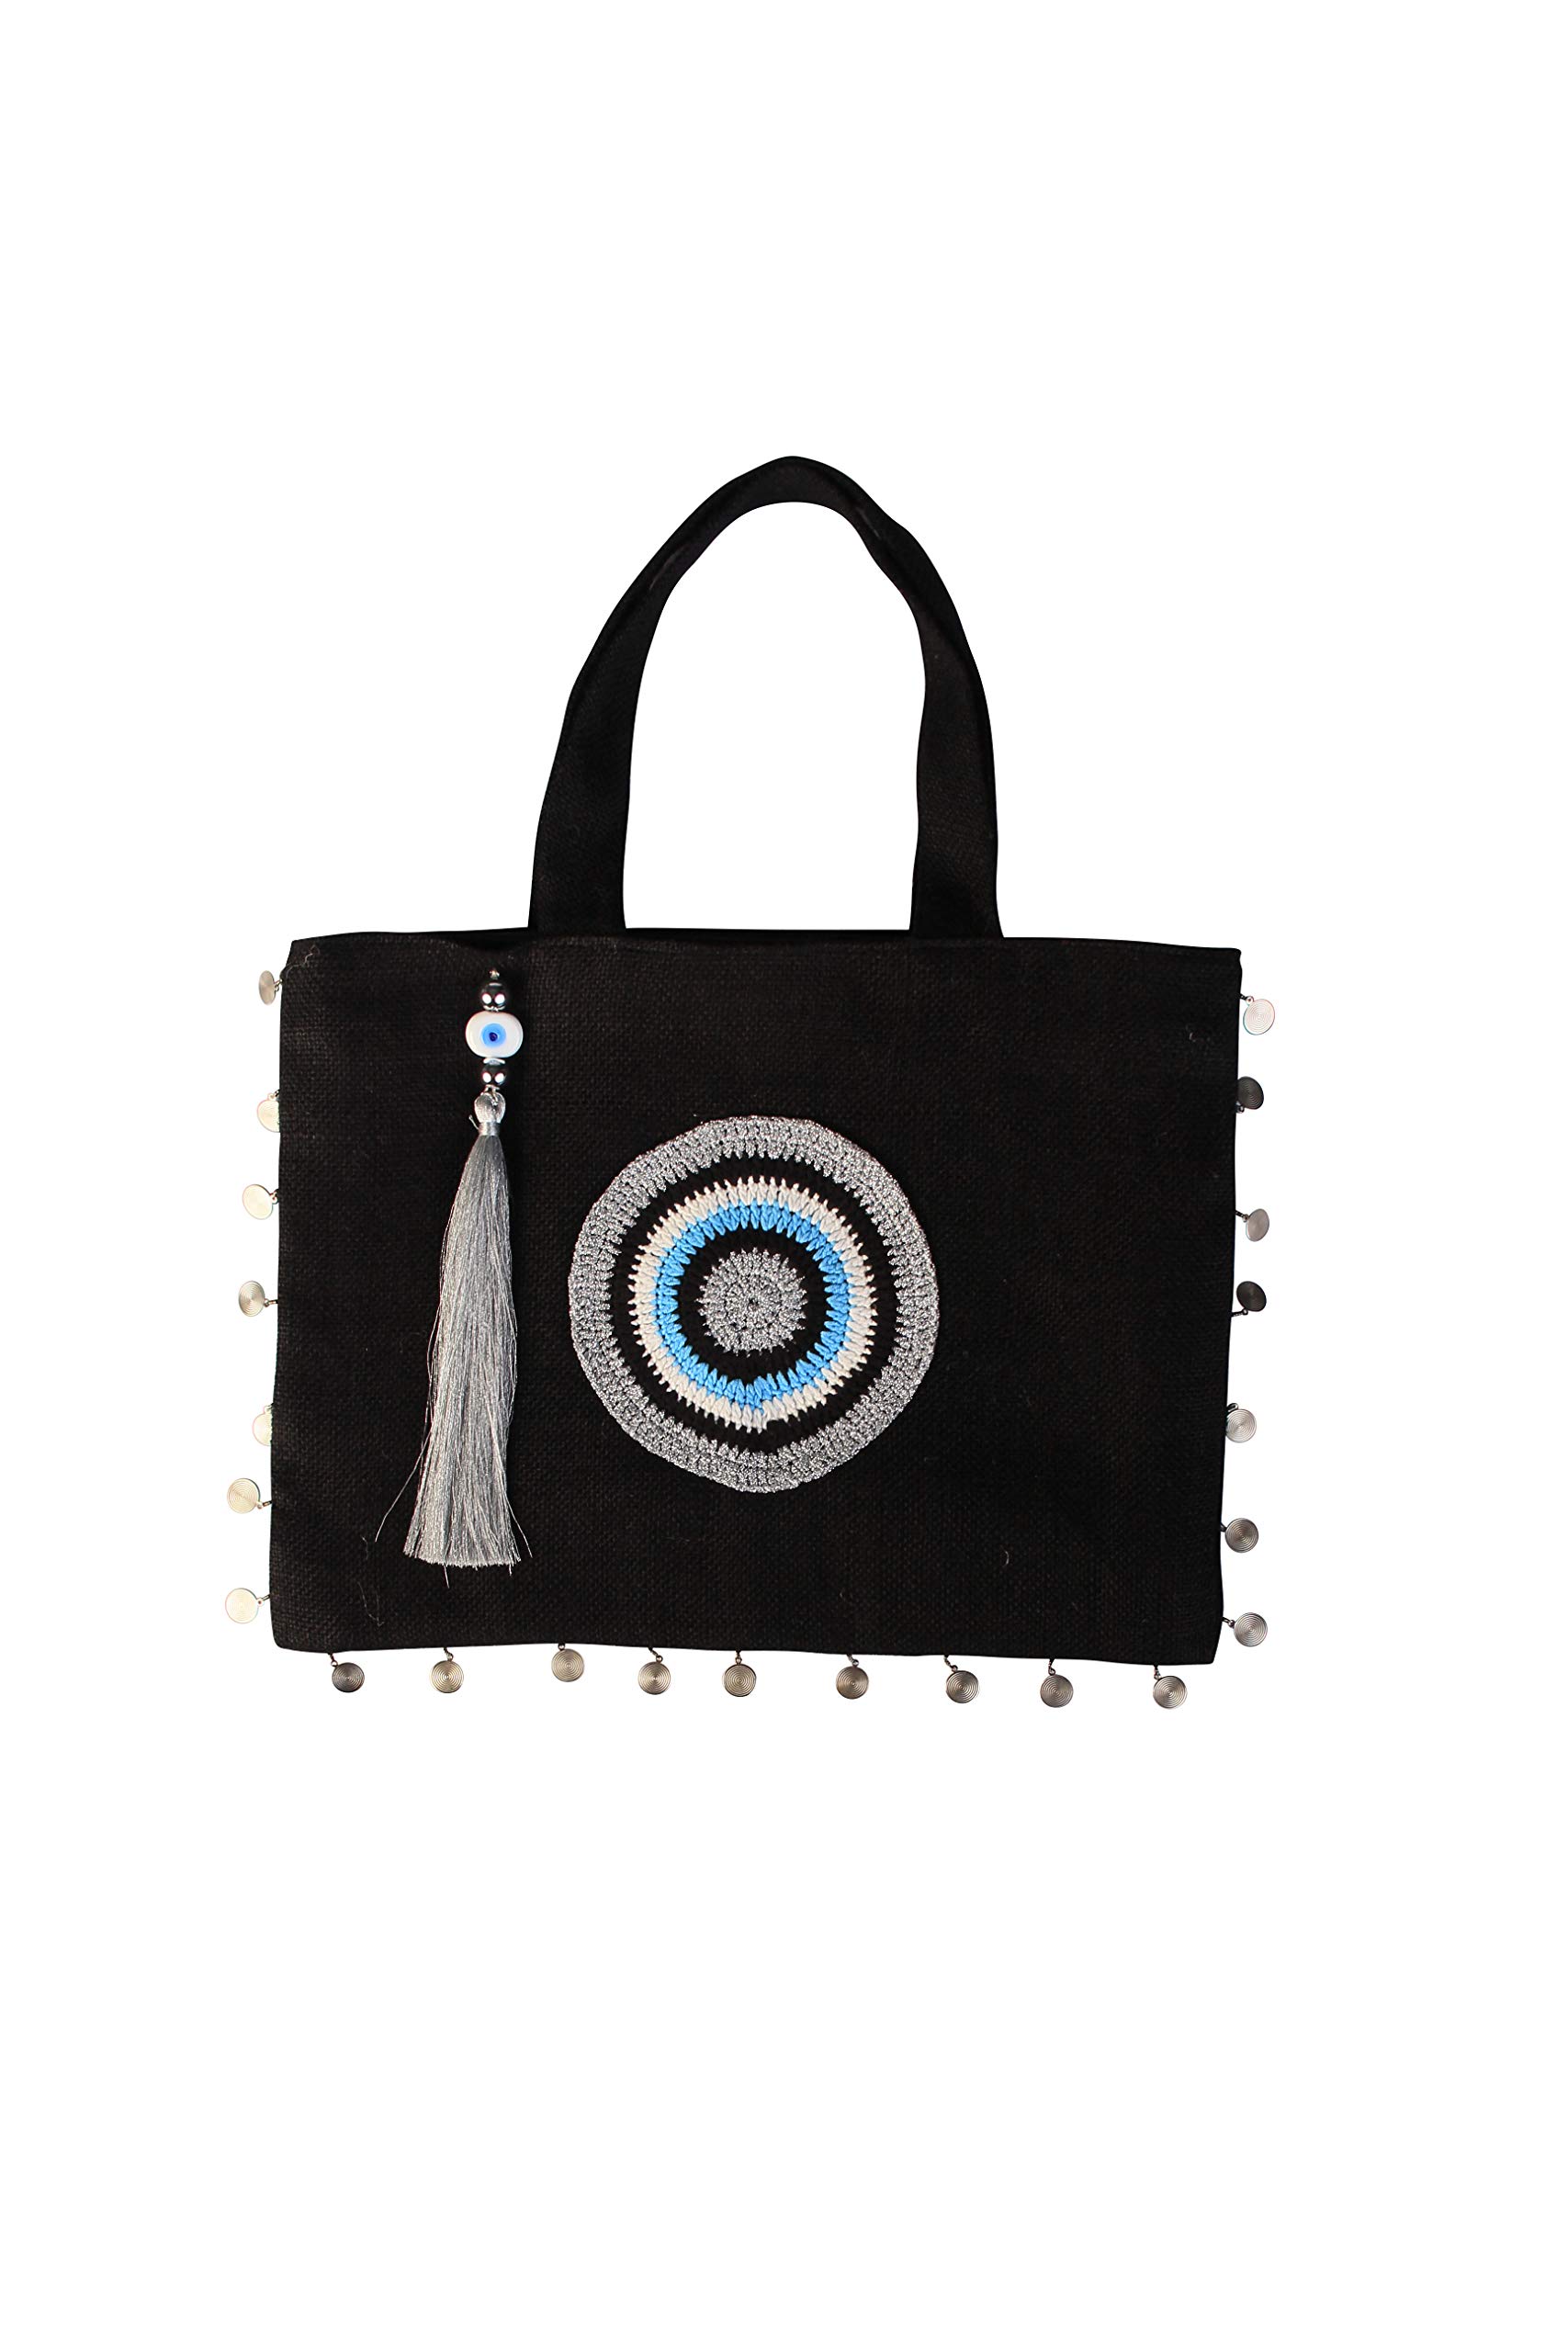 KarensLine Handmade Oversize Evil Eye Black- Silver Jute Handbag Tote Beach Bag Zipper Gift Bag with Crystals and Tassels, Large